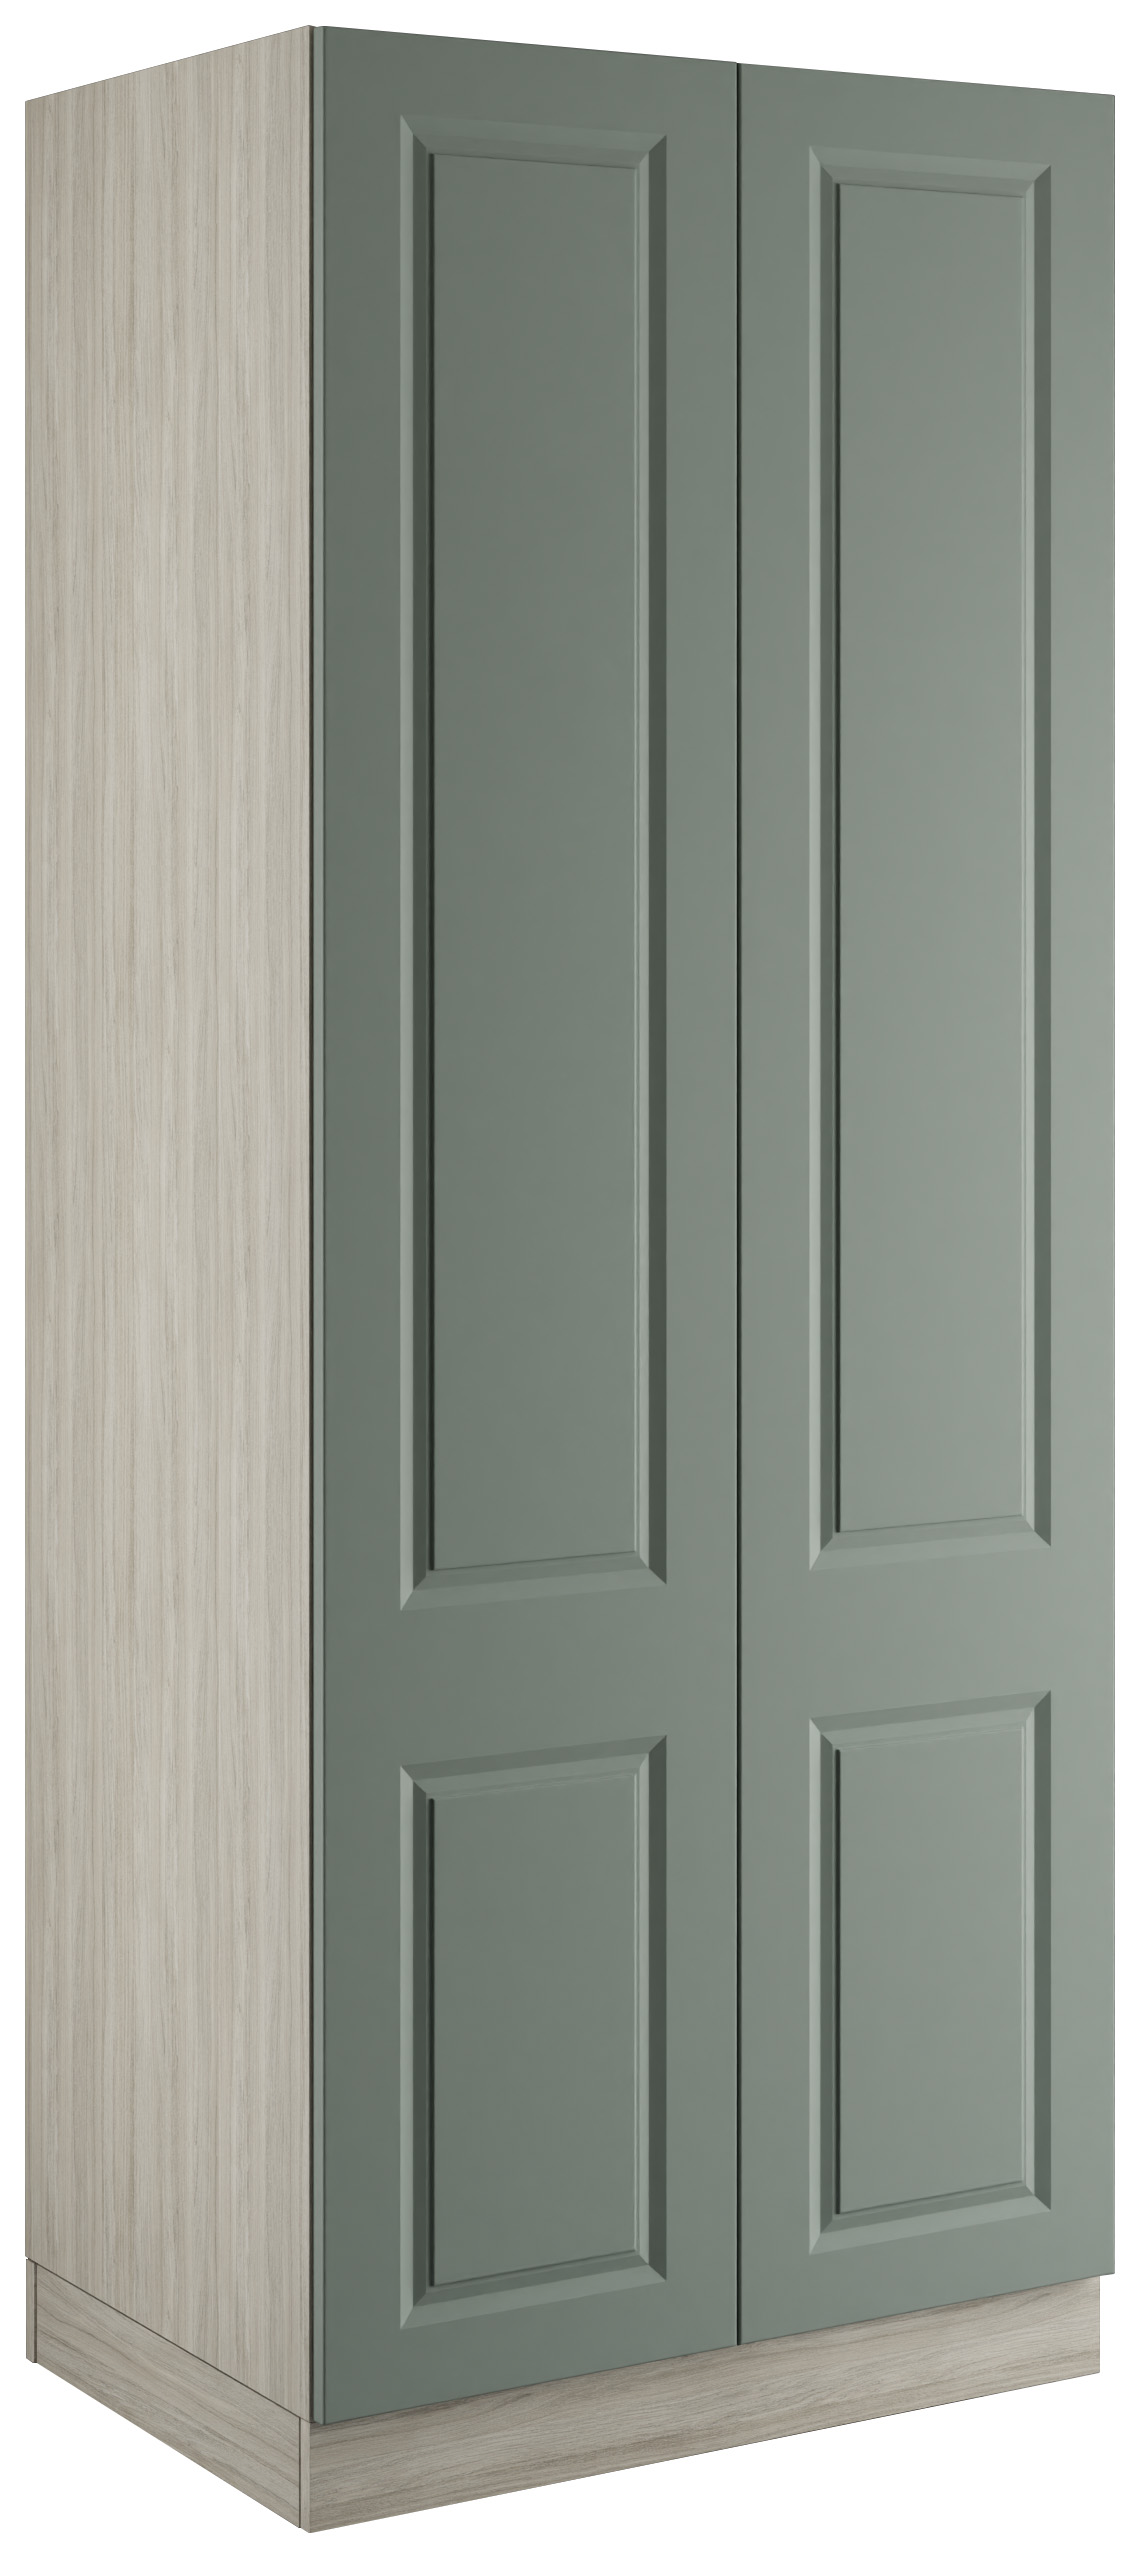 Harrogate Sage Green Double Wardrobe with Single Rail & Shelves - 900 x 2260 x 608mm